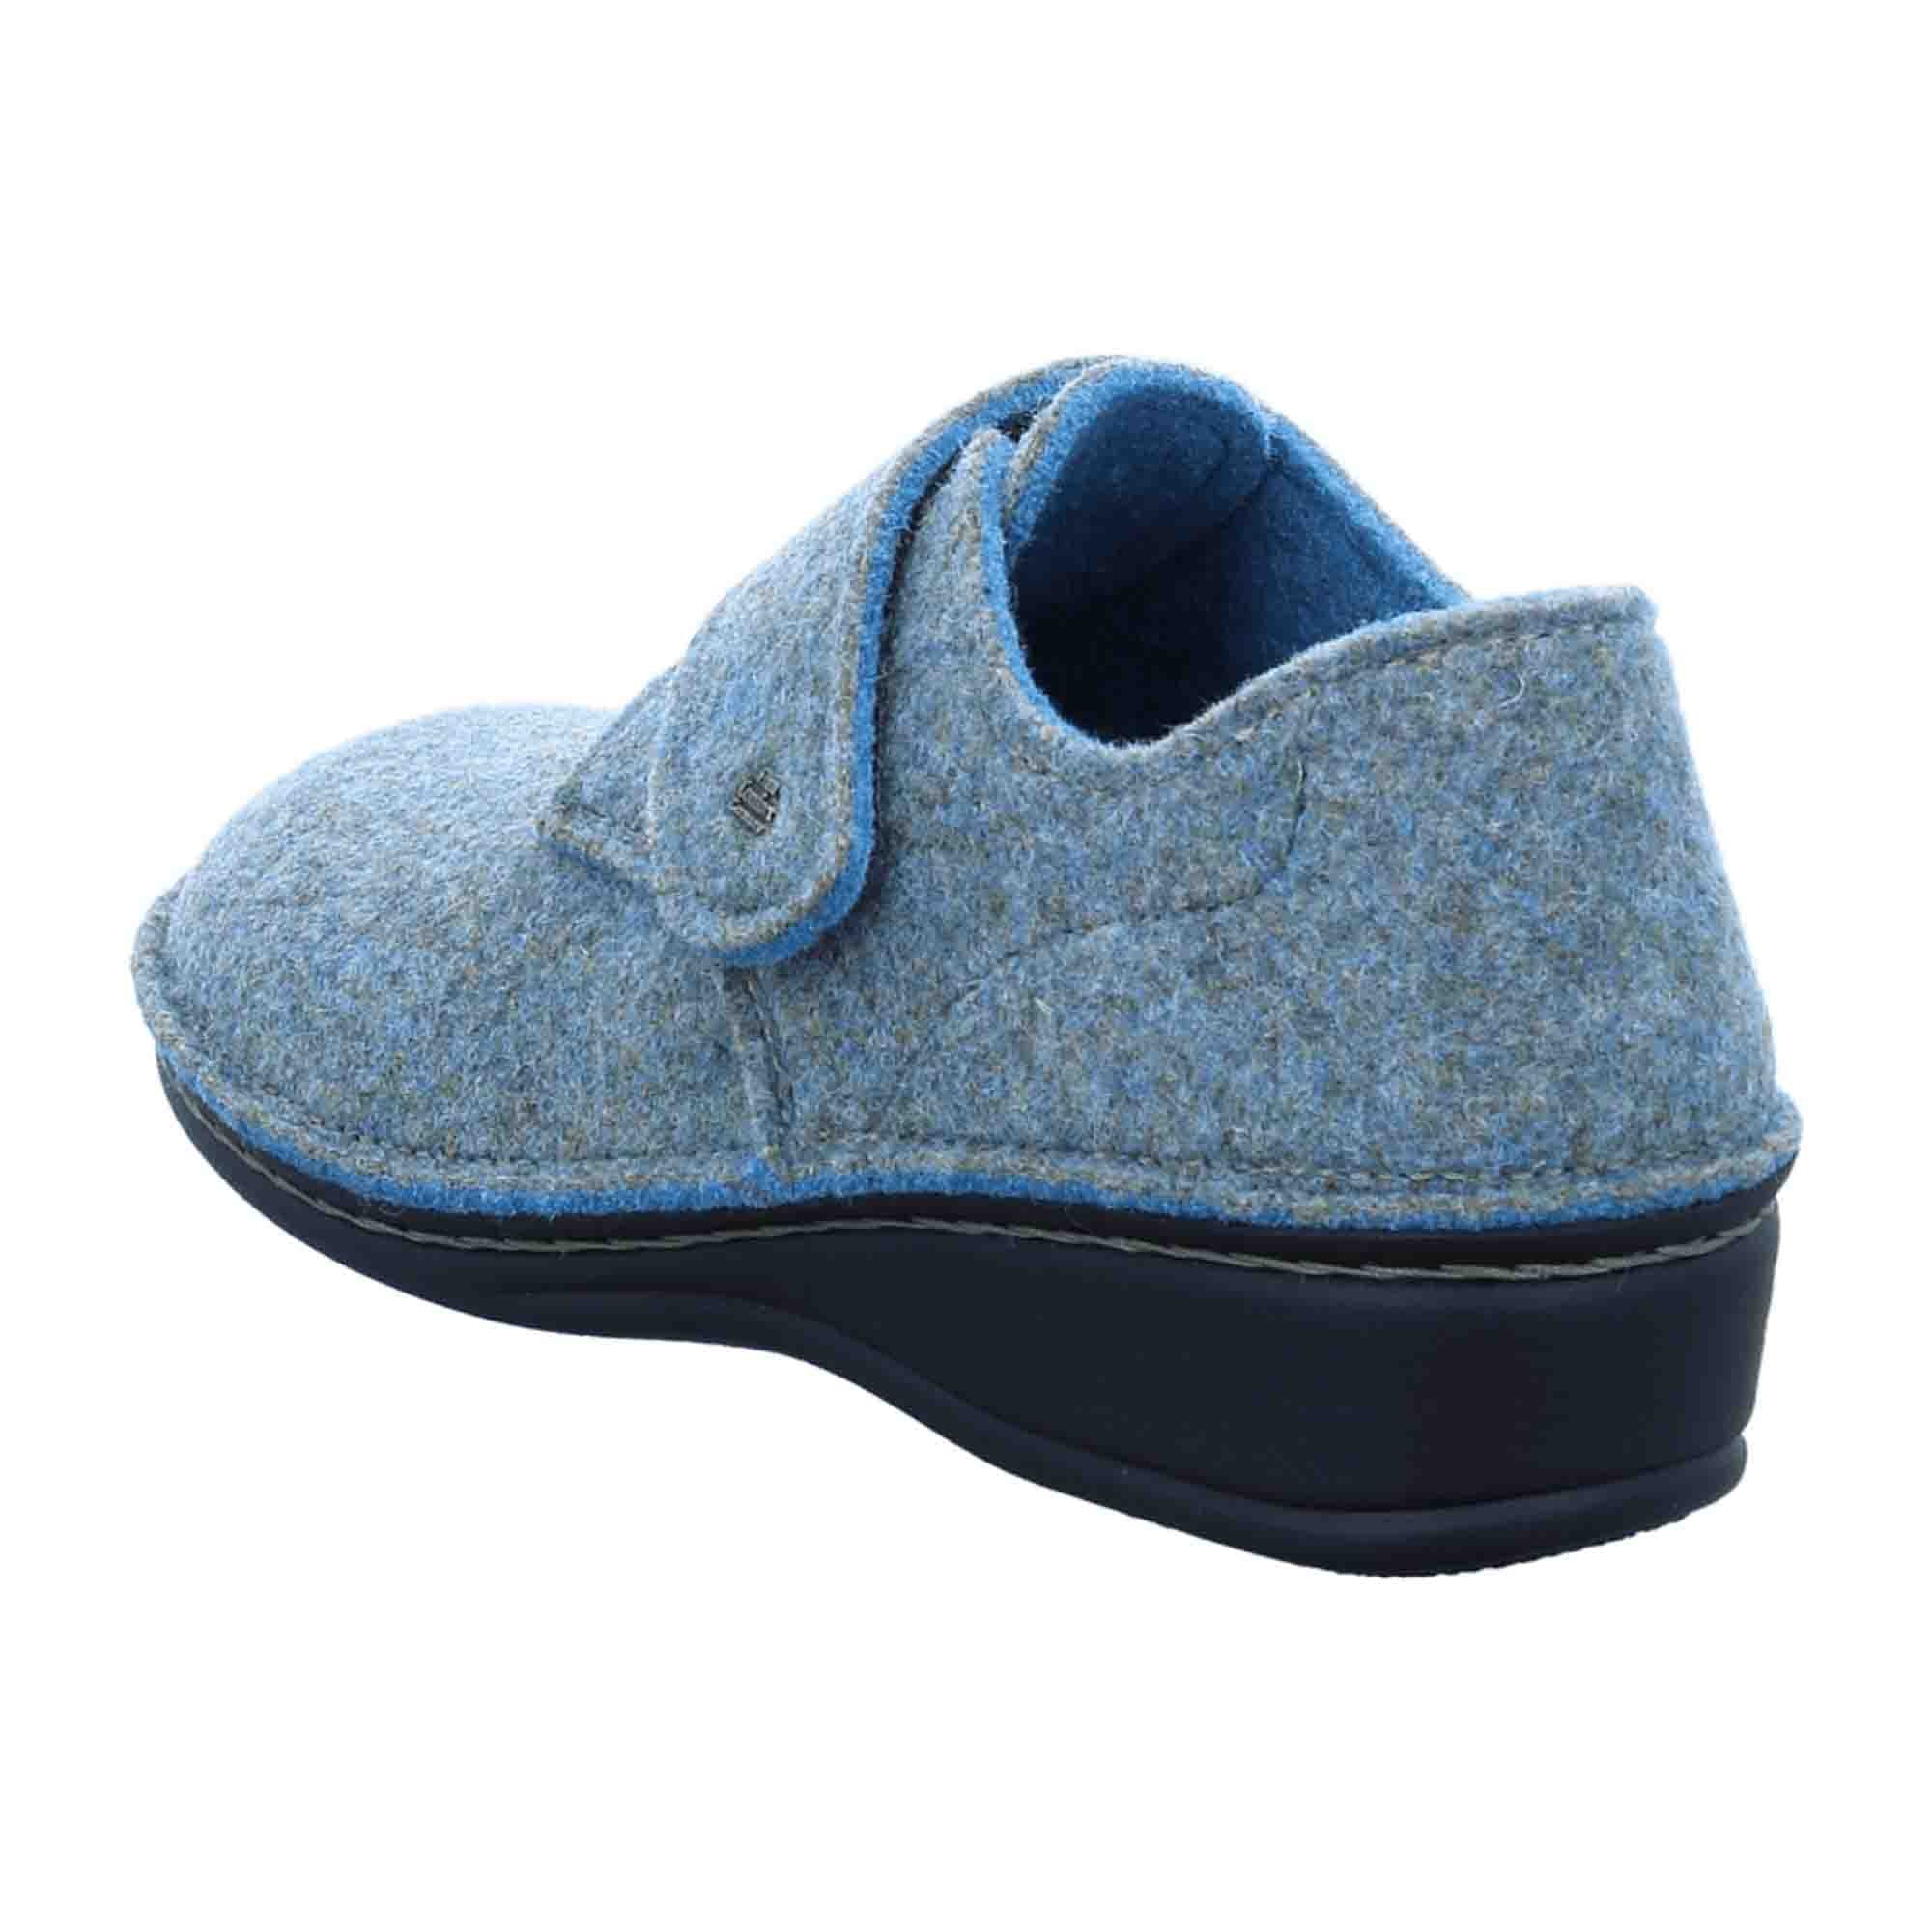 Finn Comfort Adelboden C Women's Comfort Slippers, Blue